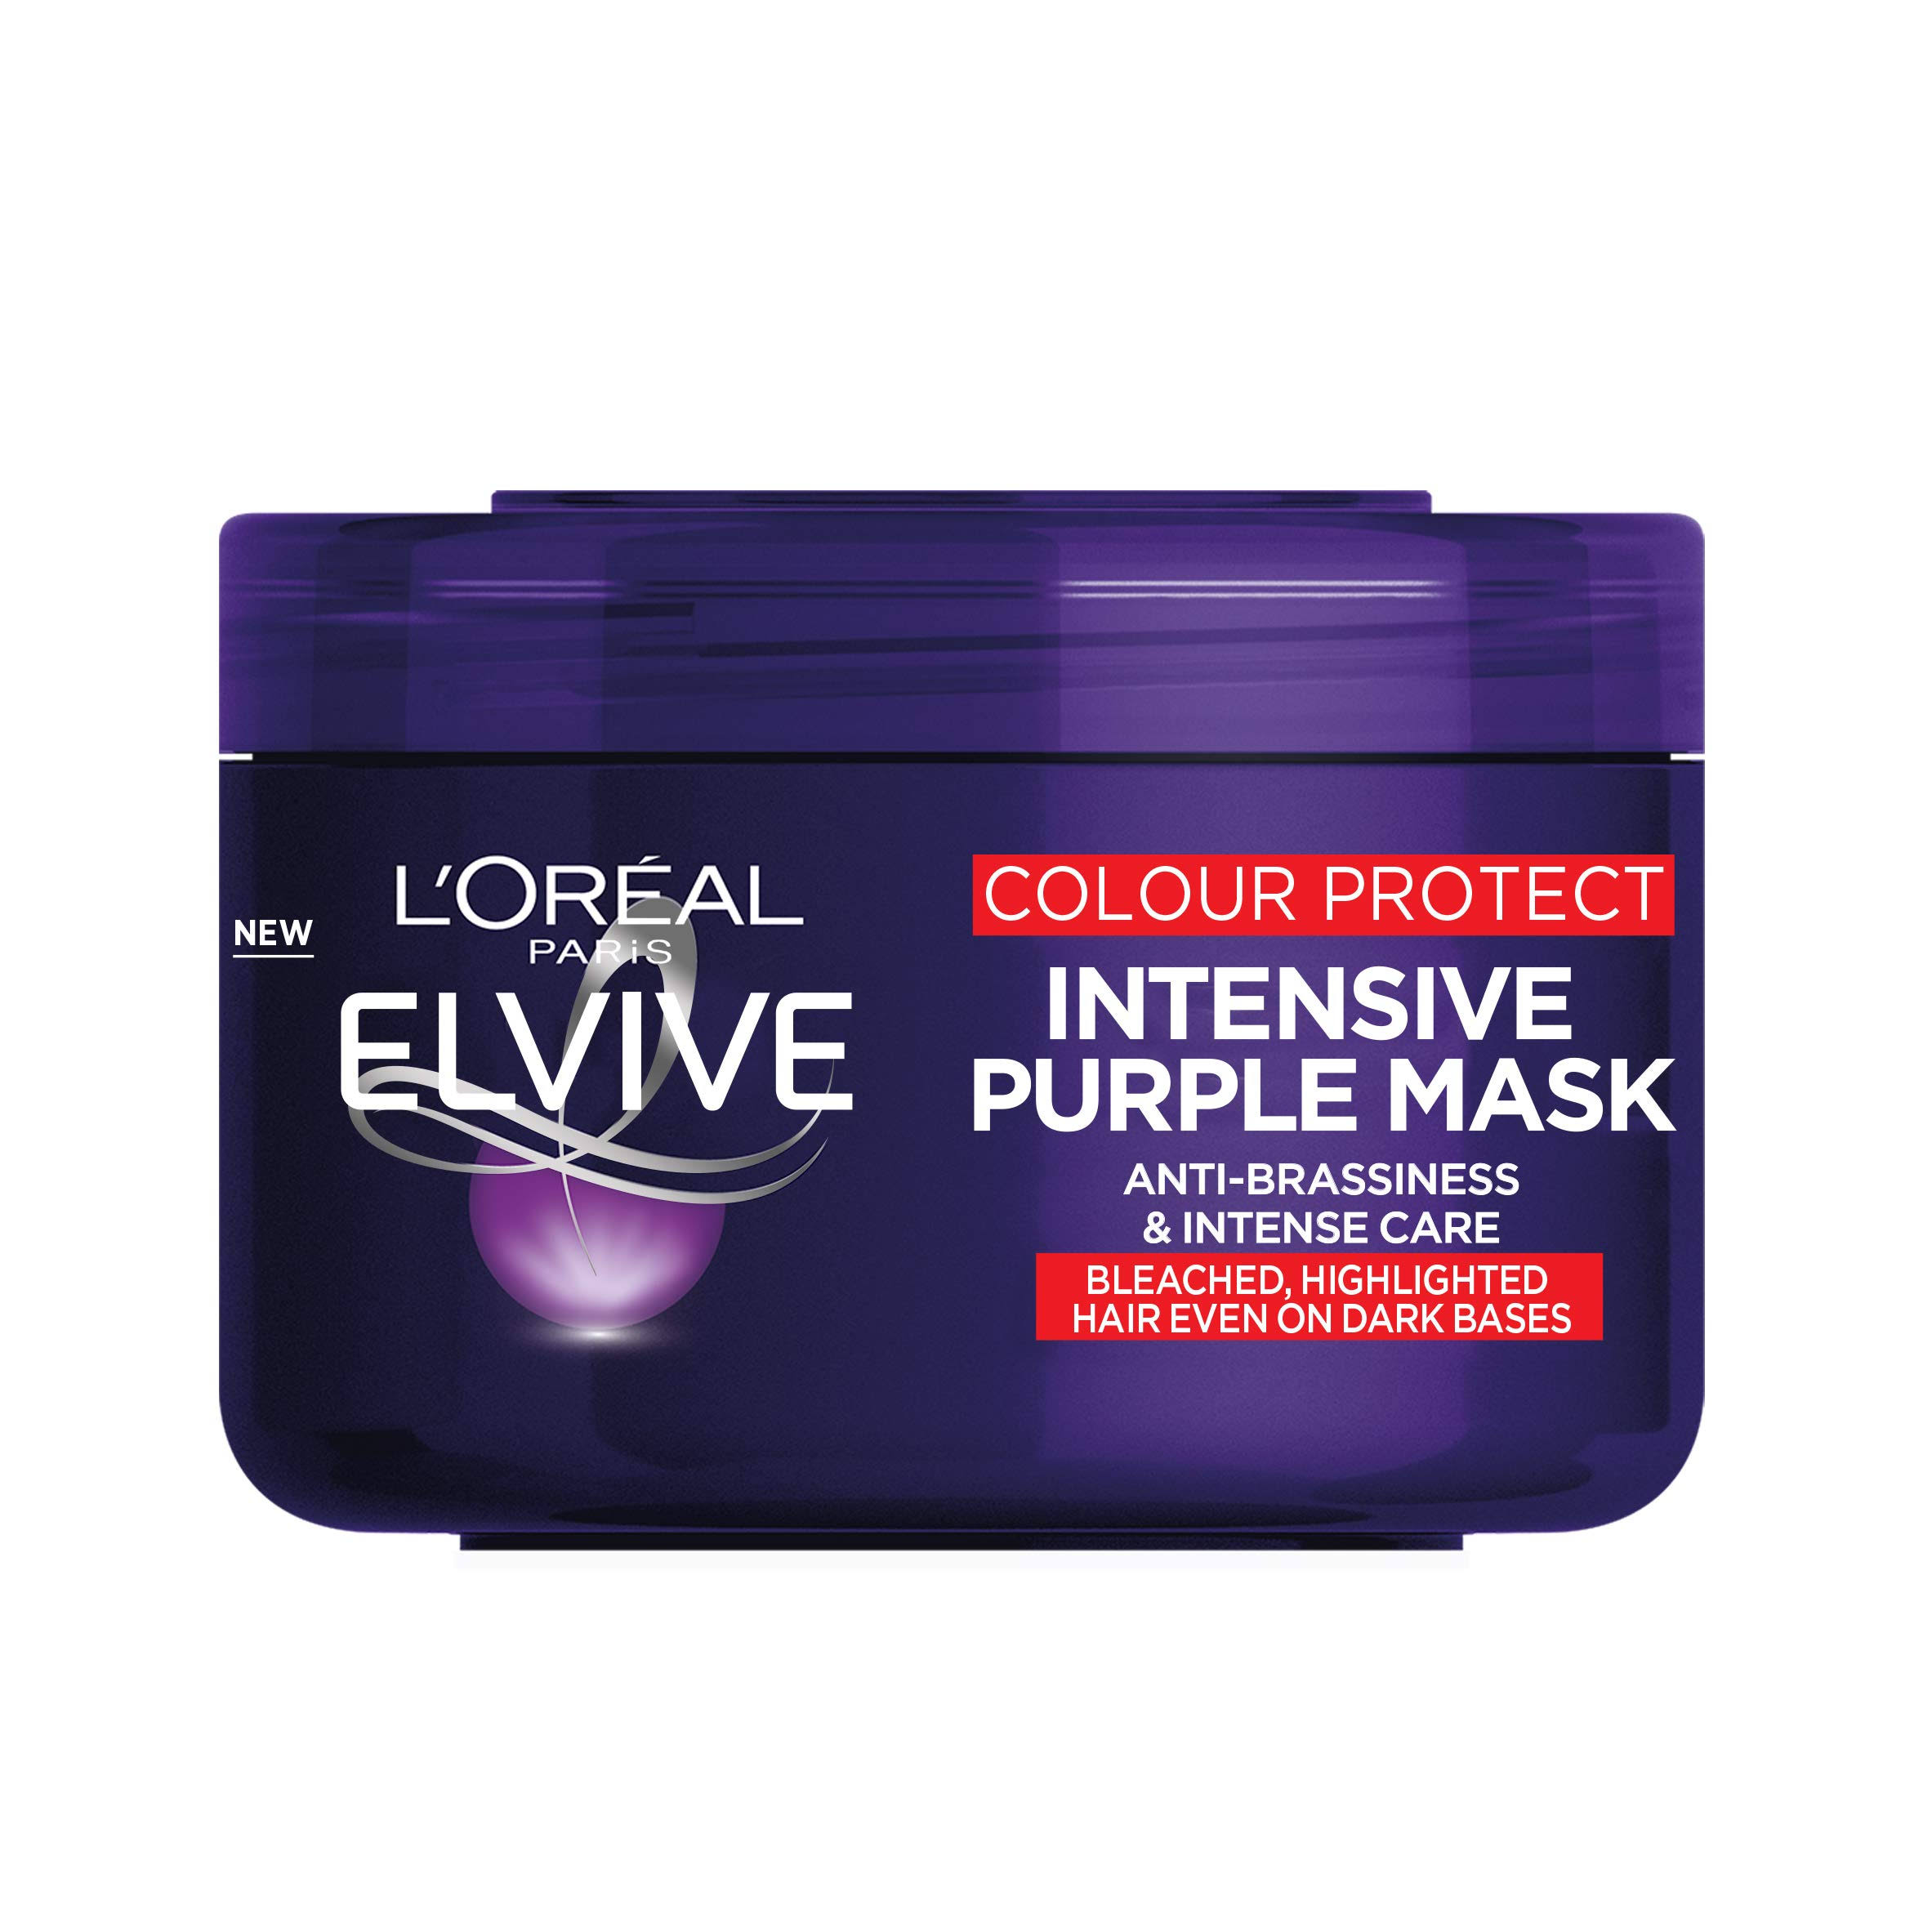 L'Oreal Paris Elvive Colour Protect Anti-Brassiness Purple Mask 250ml